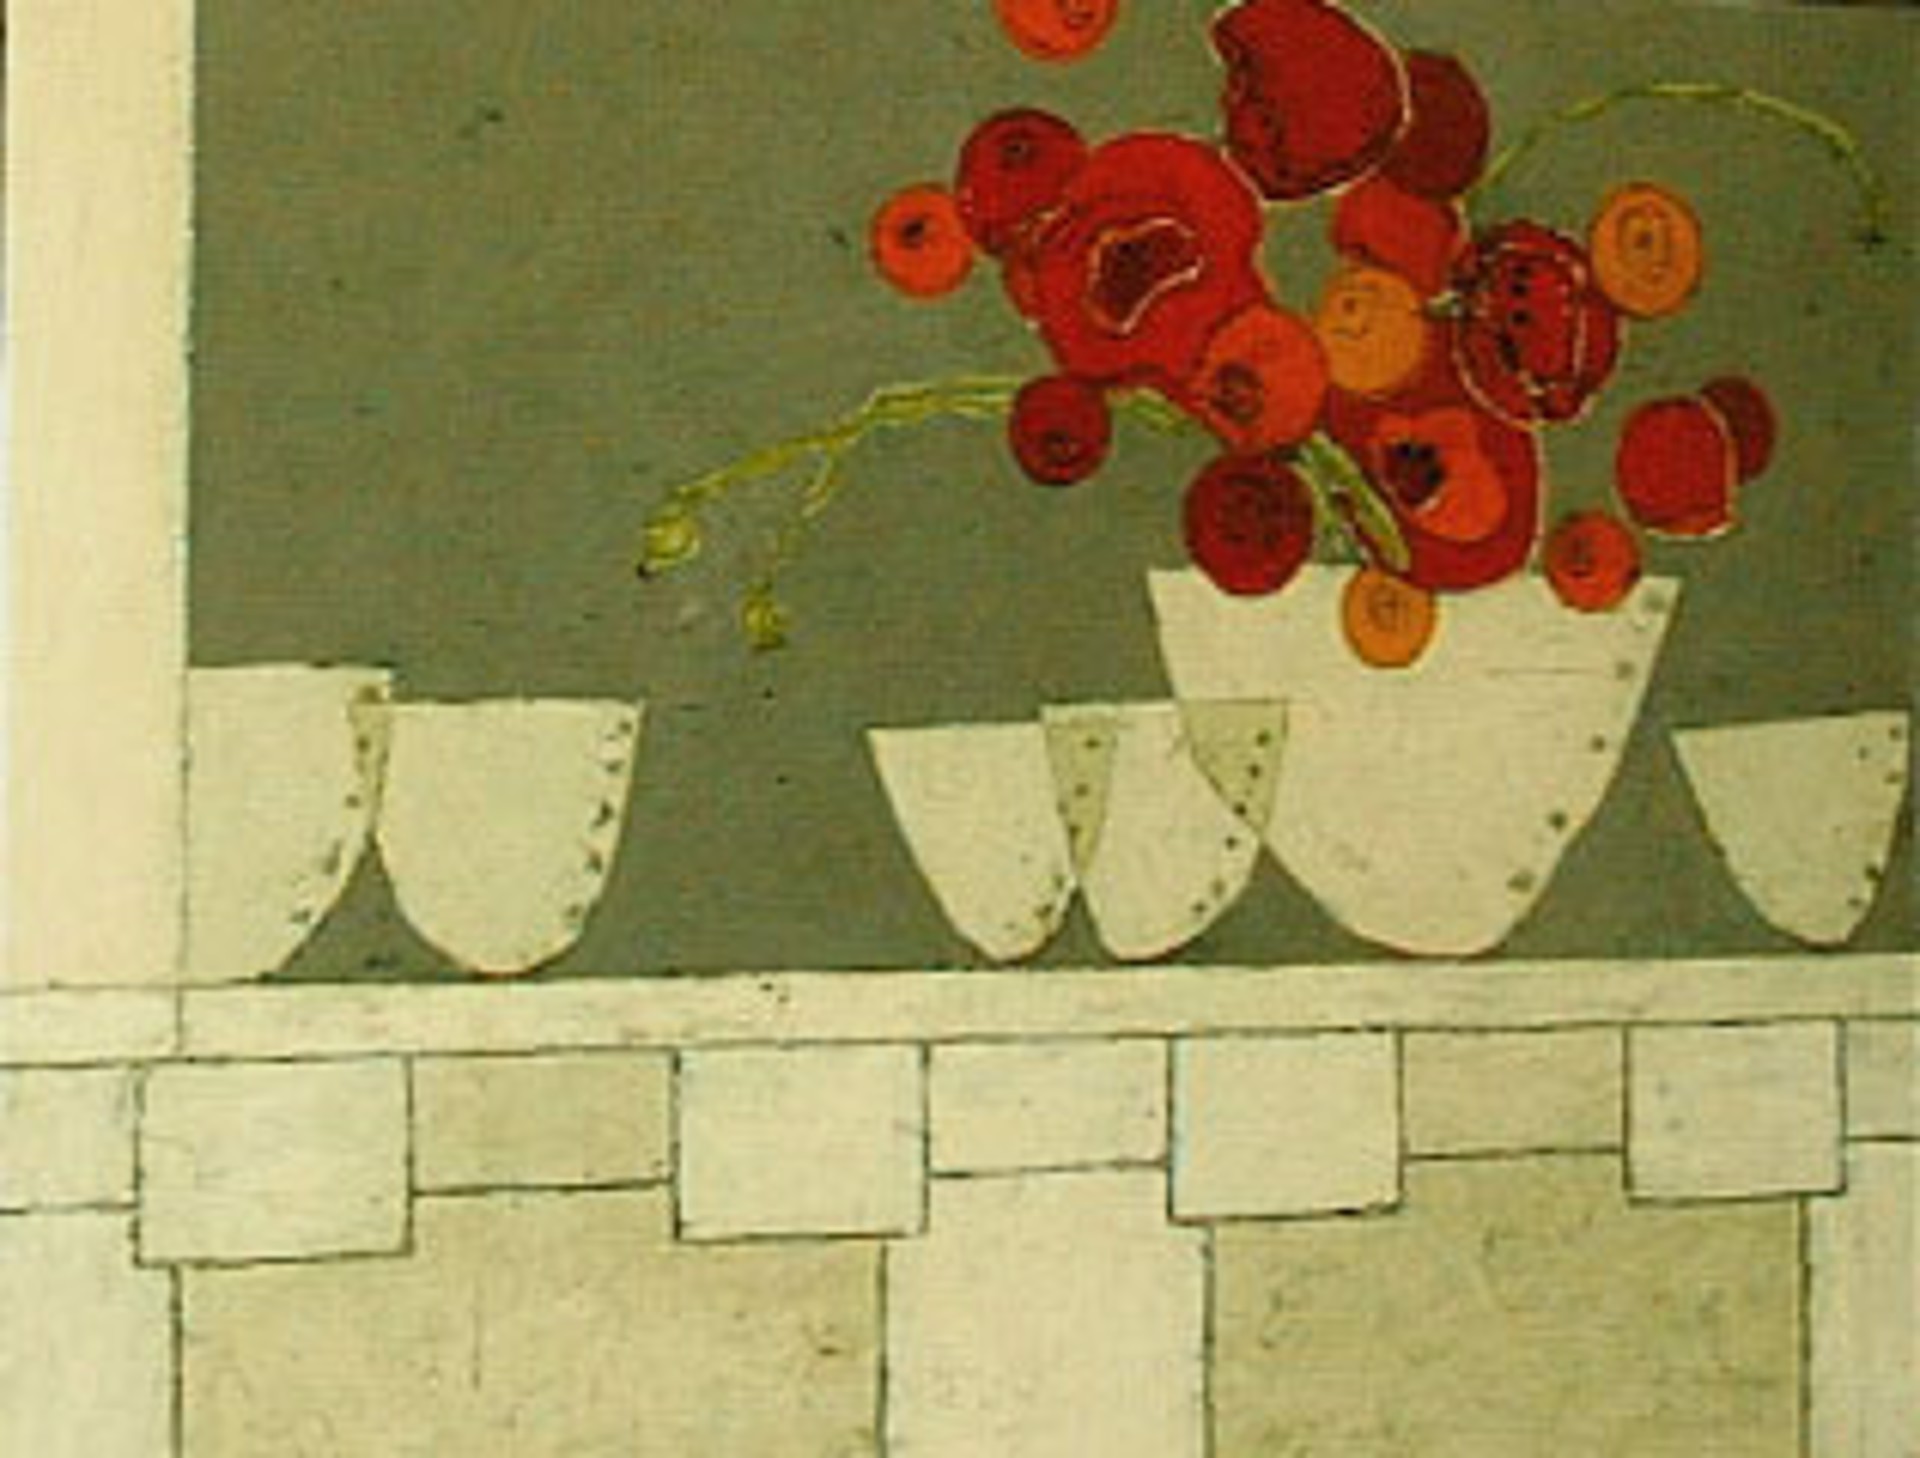 Six Bowls with Poppies by Karen Tusinski